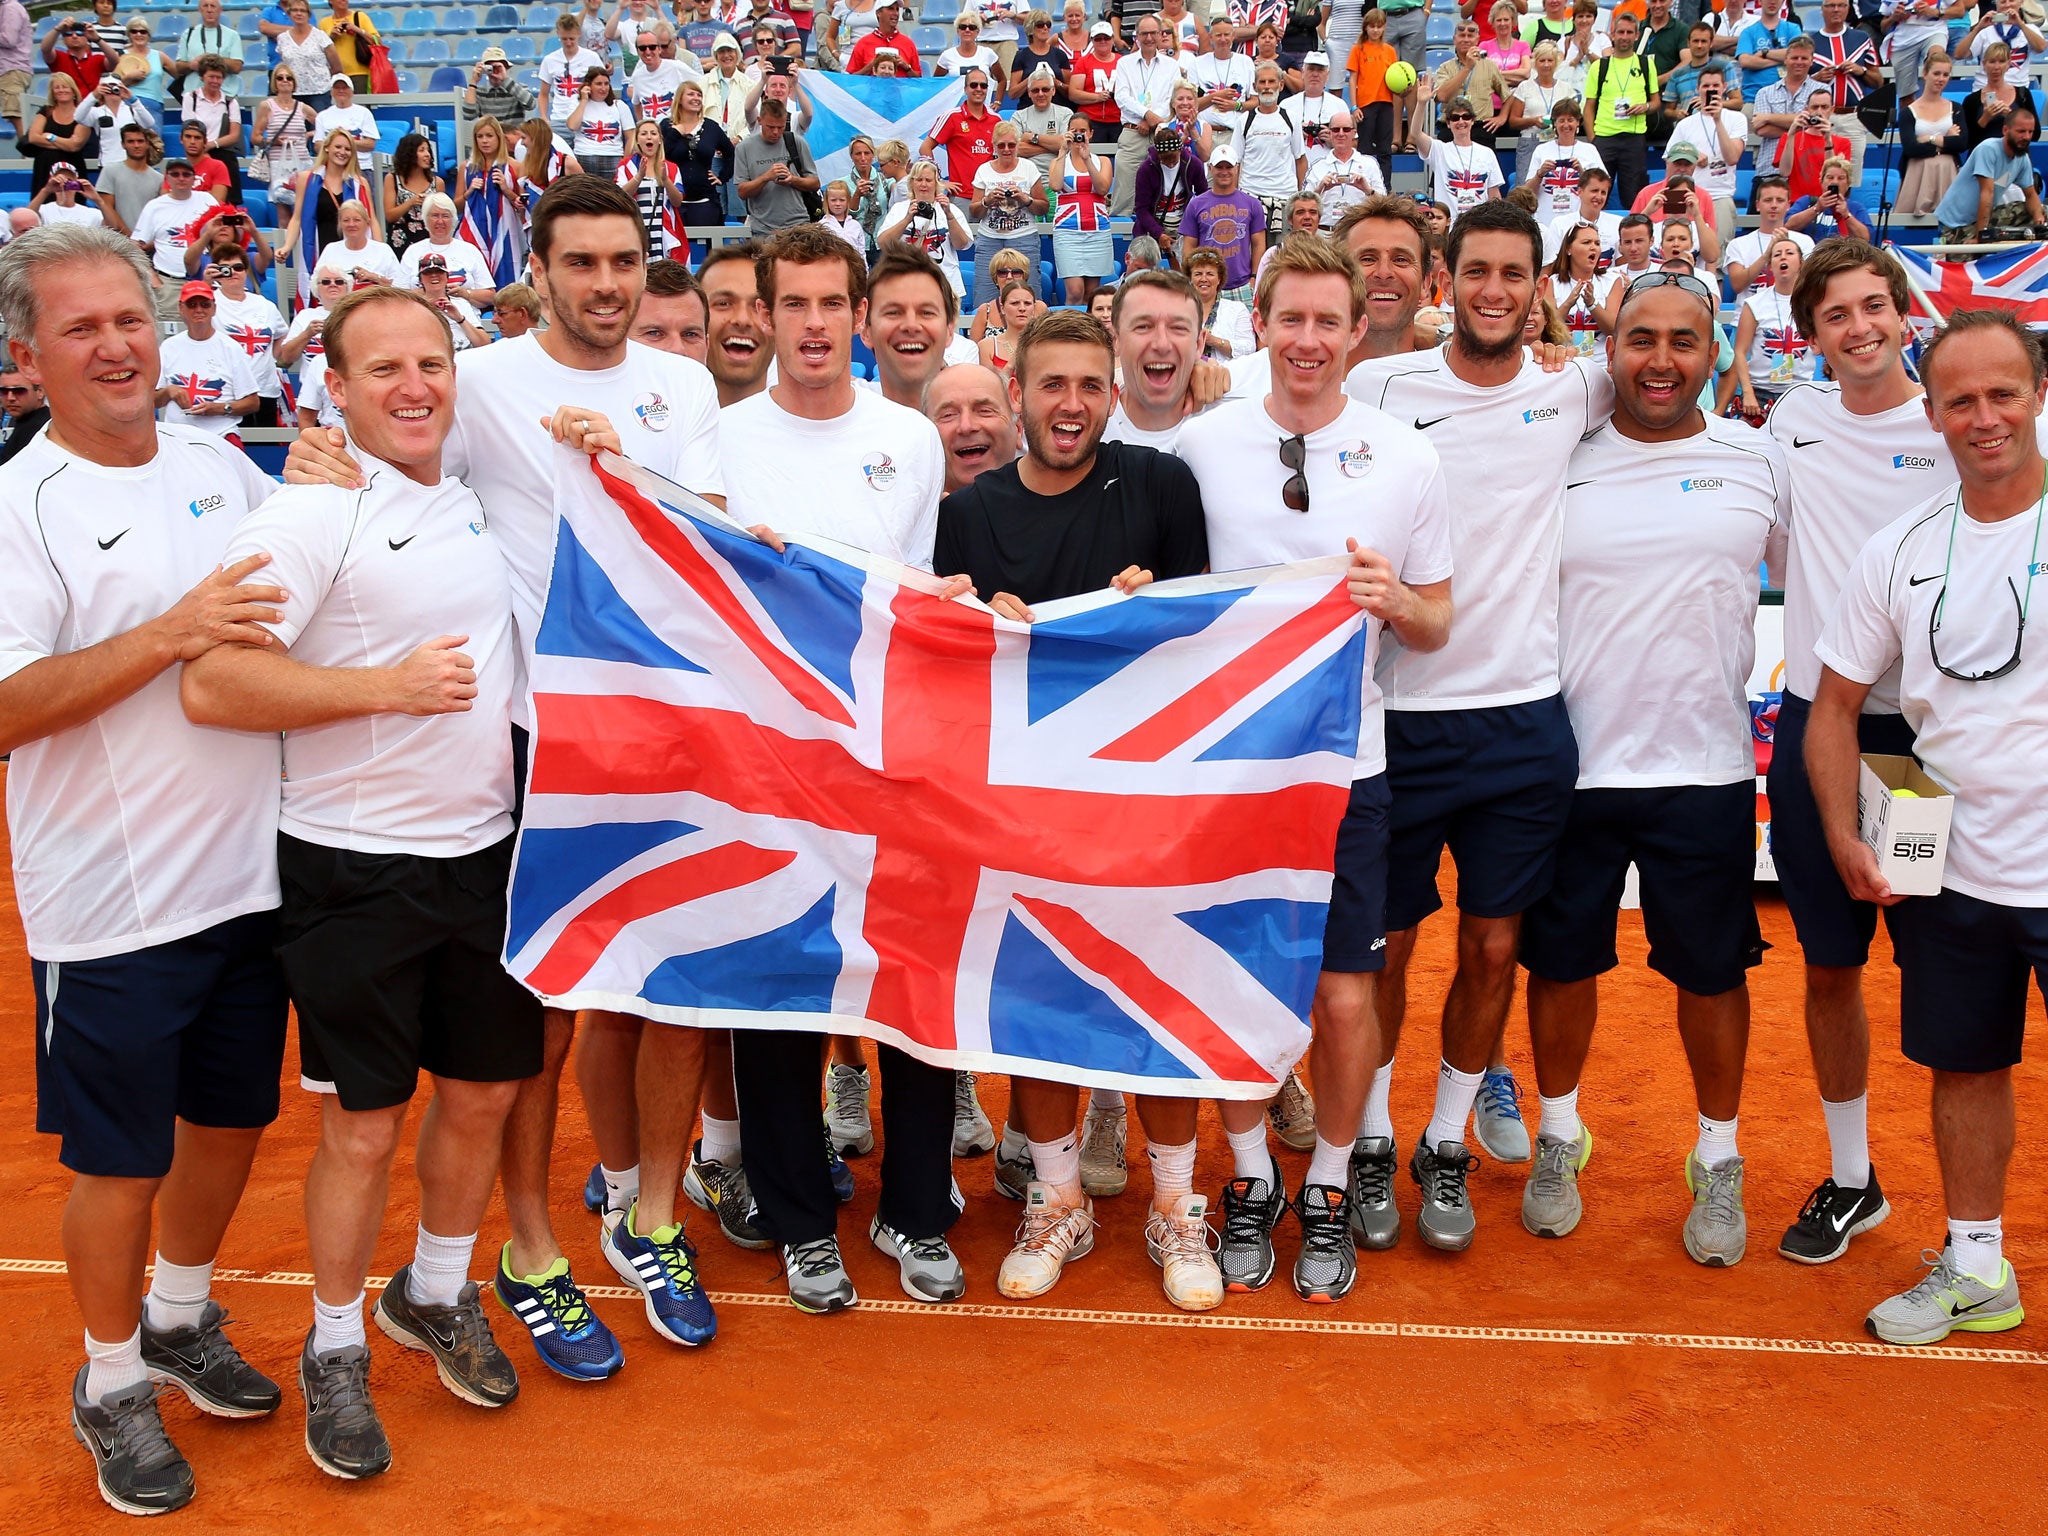 The British Davis Cup team celebrate after defeating Croatia